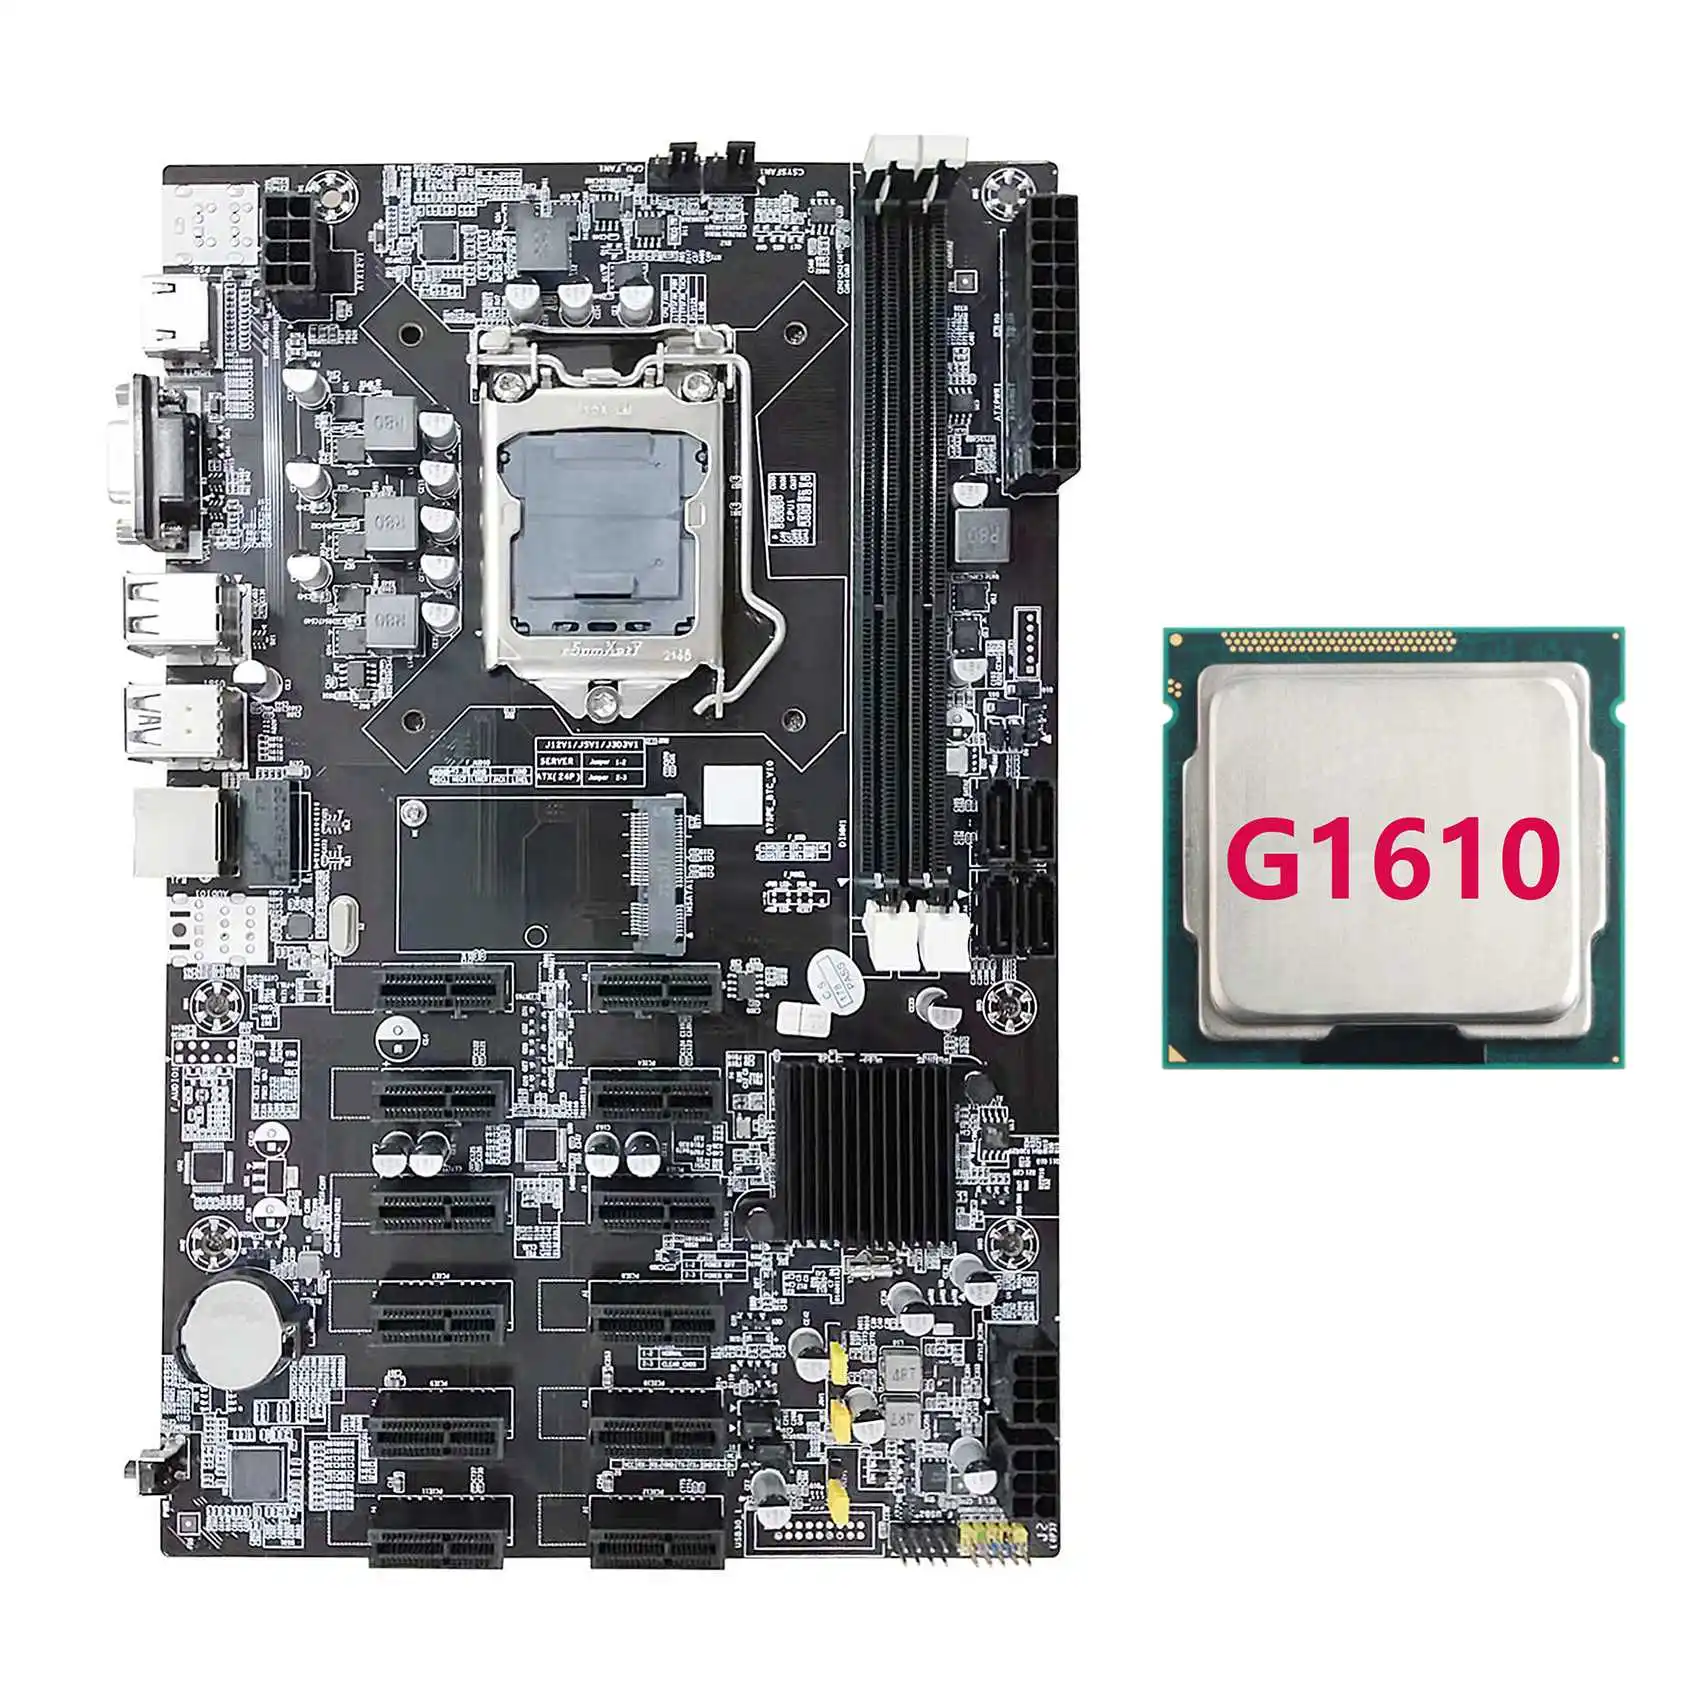 B75 12 PCIE ETH Mining Motherboard+G1610 CPU LGA1155 MSATA USB3.0 SATA3.0 Support DDR3 RAM B75 BTC Miner Motherboard